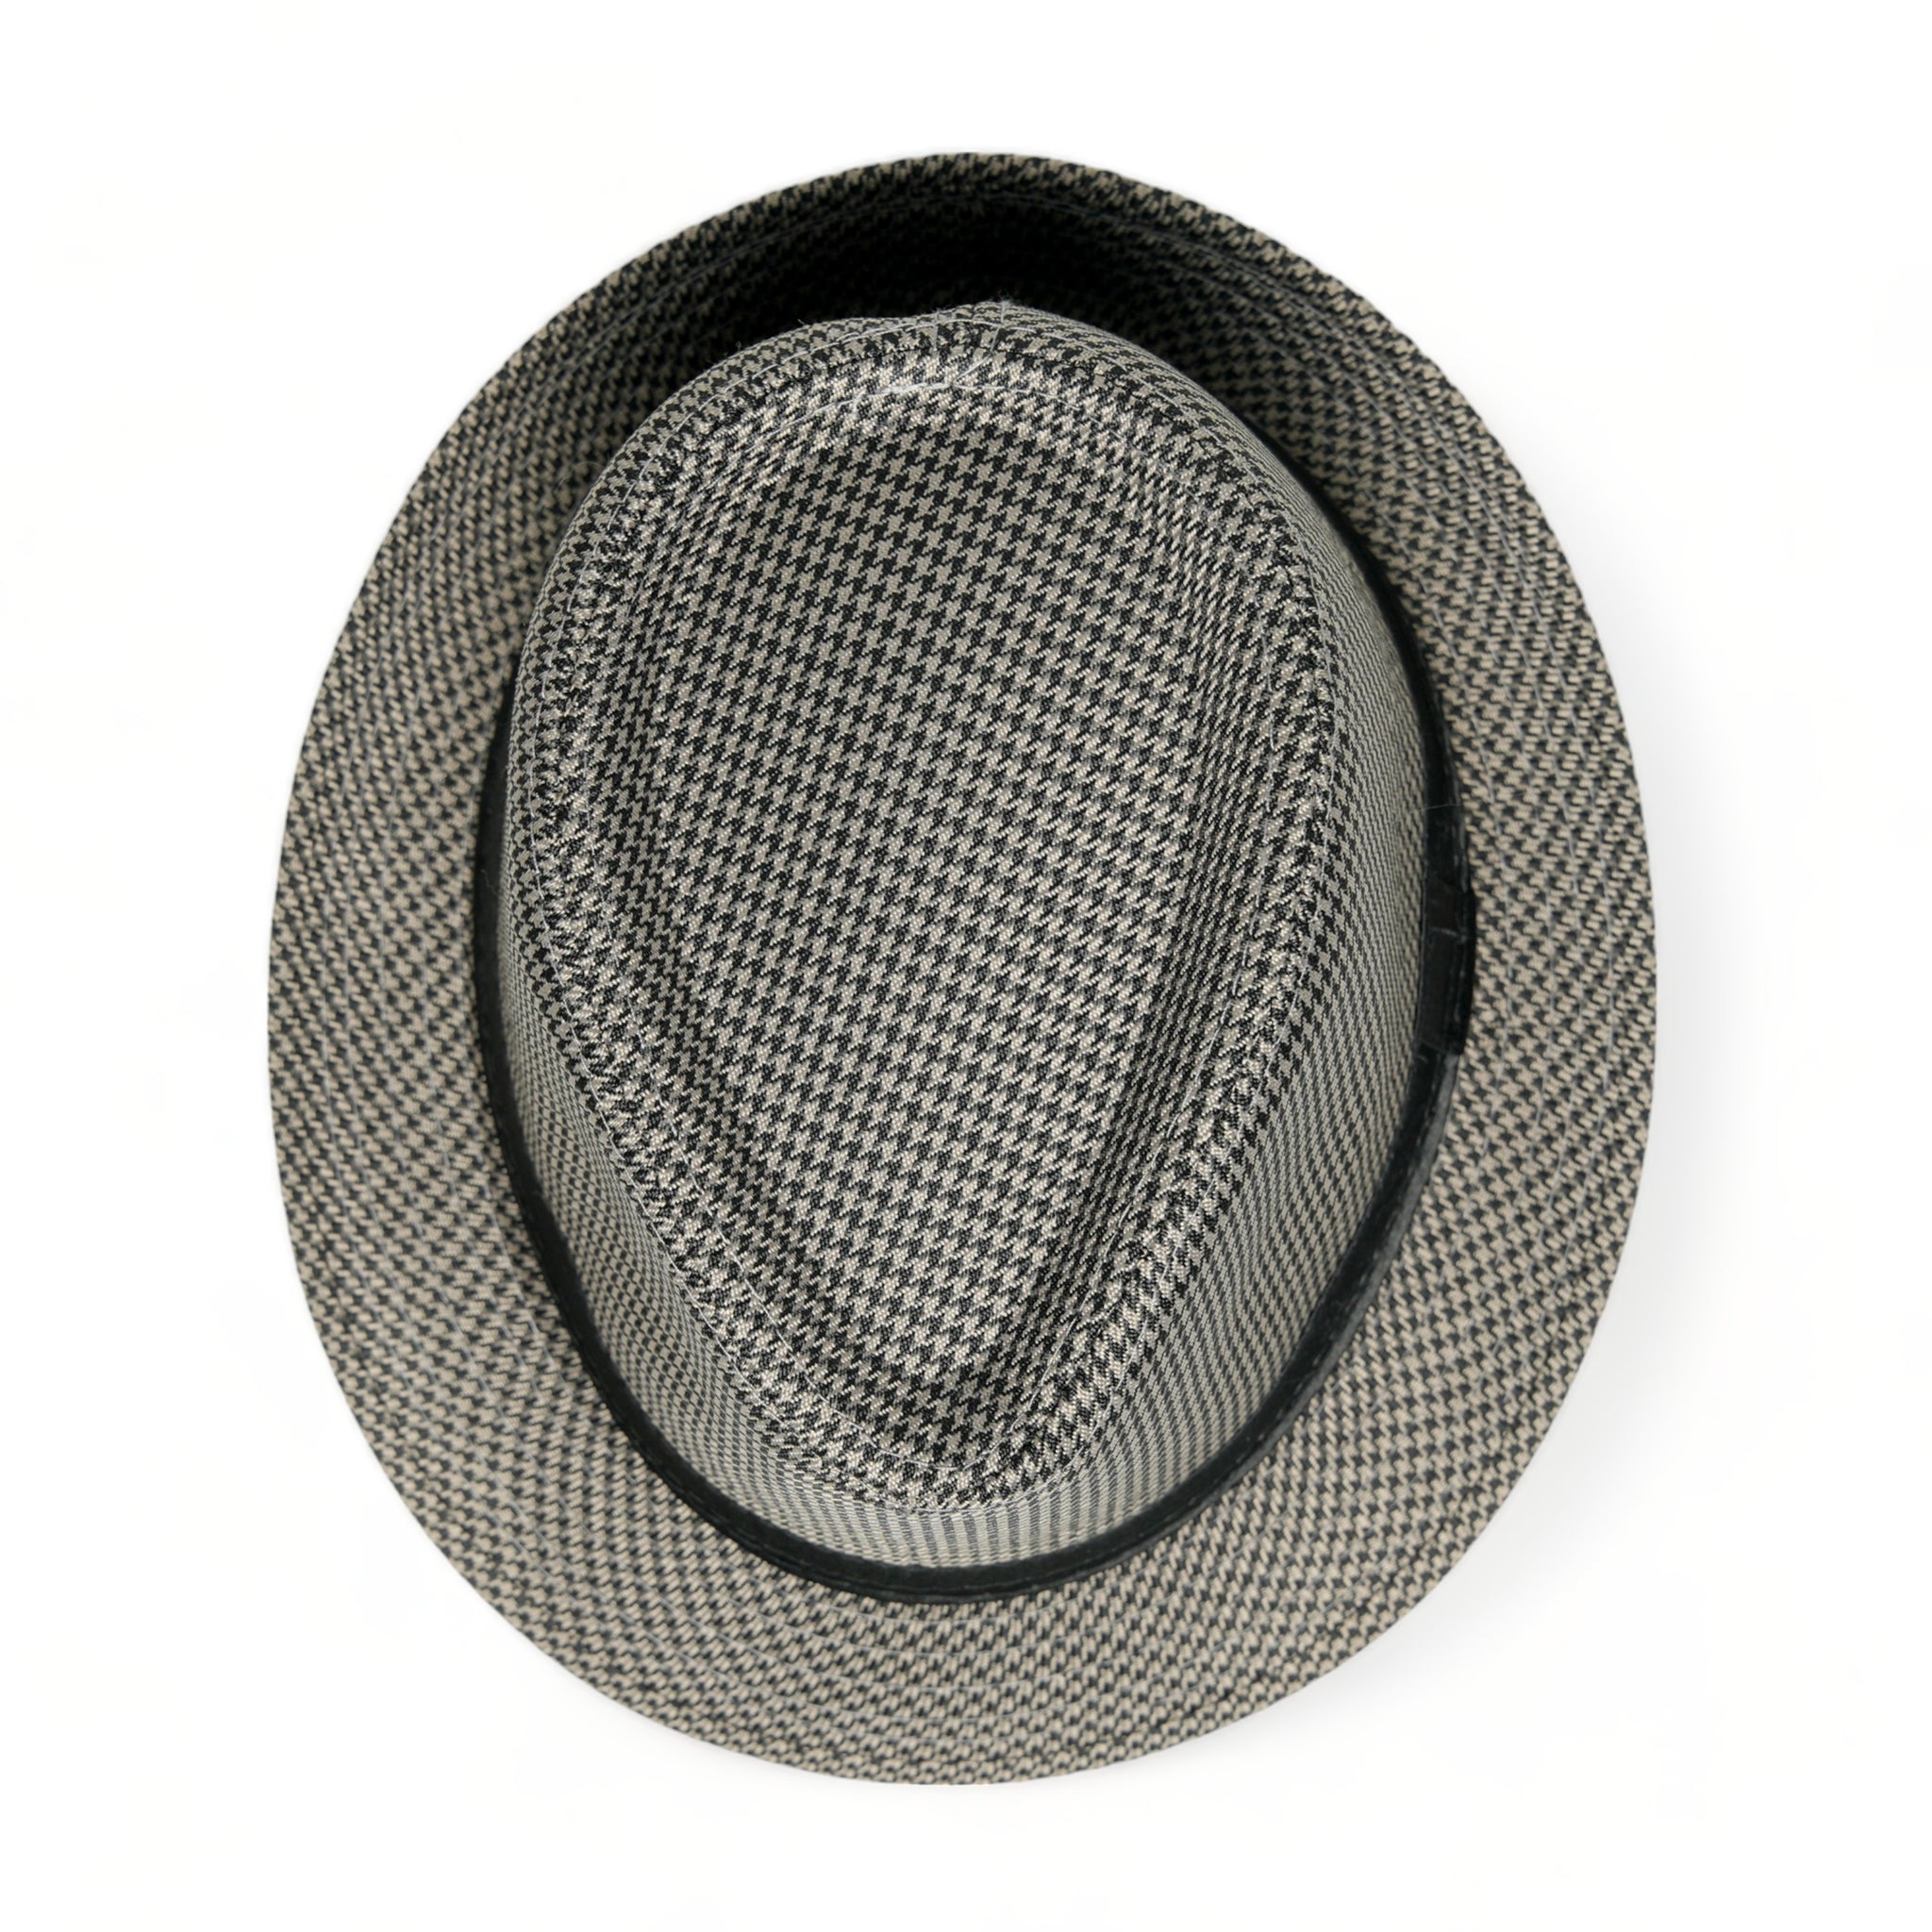 Chokore Fedora Hat in Houndstooth Pattern (Gray)